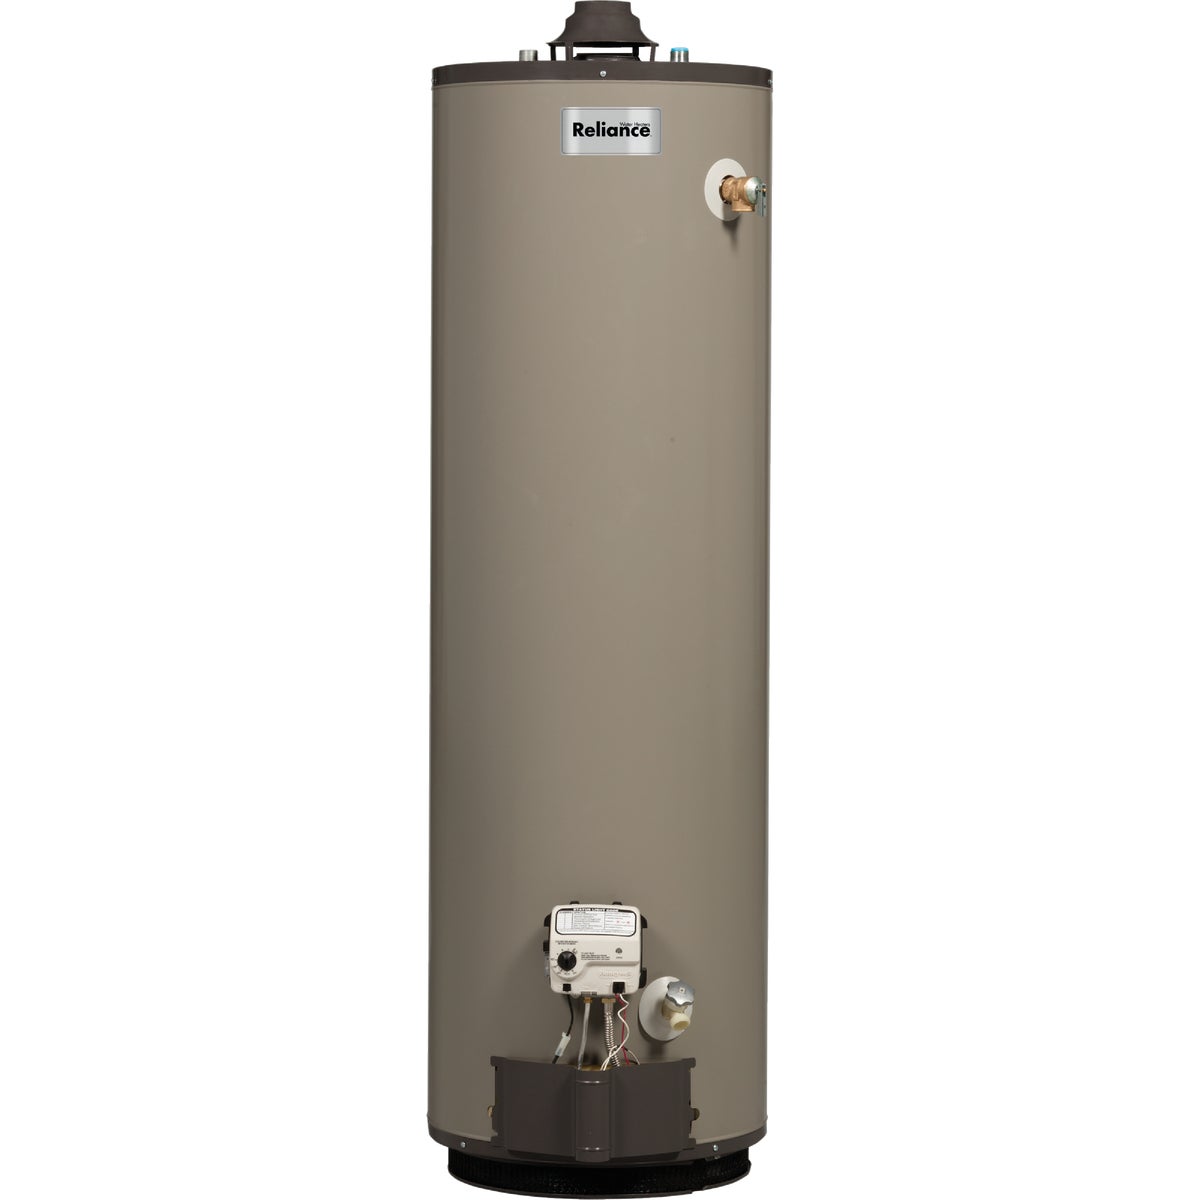 Item 401858, Self-cleaning liquid propane (LP) water heater.